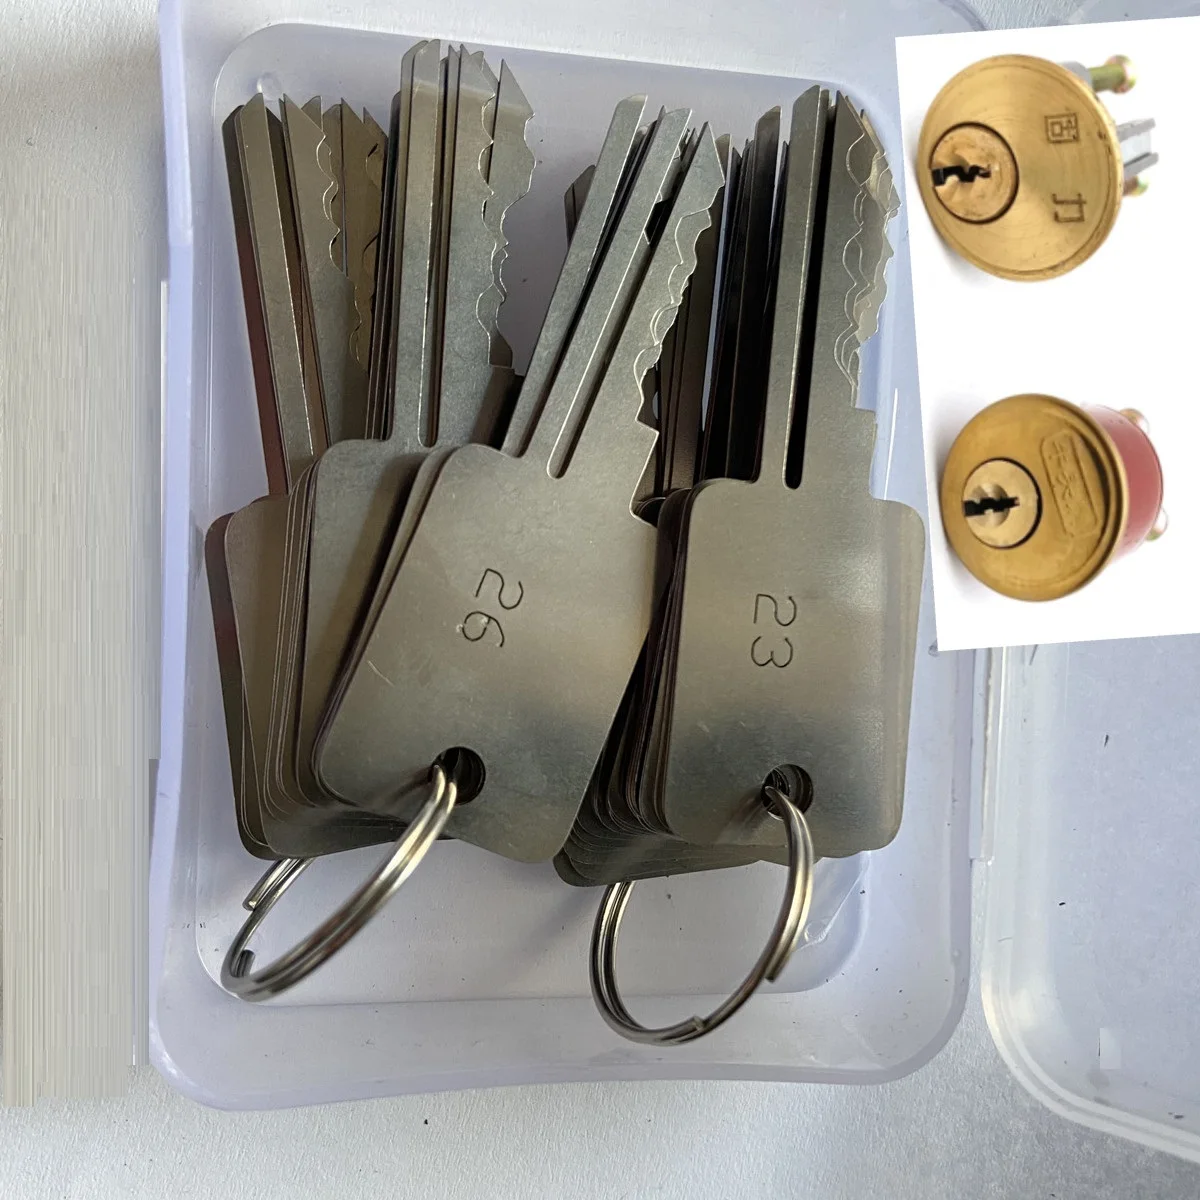 

48in1 master key Locksmith Lock Pick Set Stainless Steel Double Row Tension Removal Hooks Lock Picks Tools Lockpick